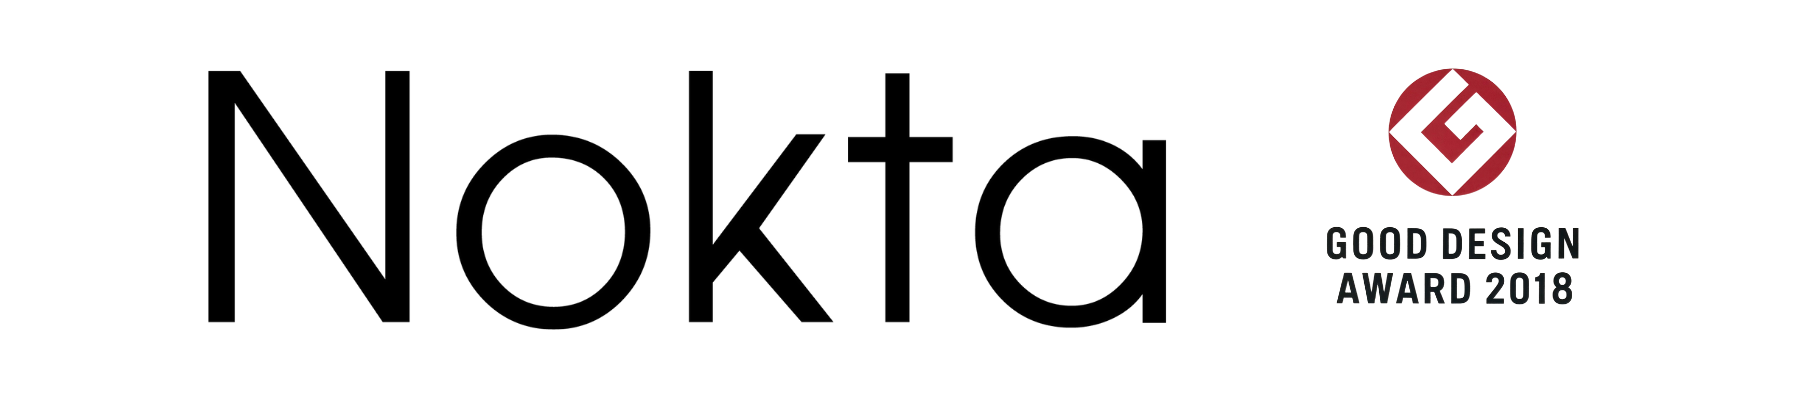 NOKTA Brand Products